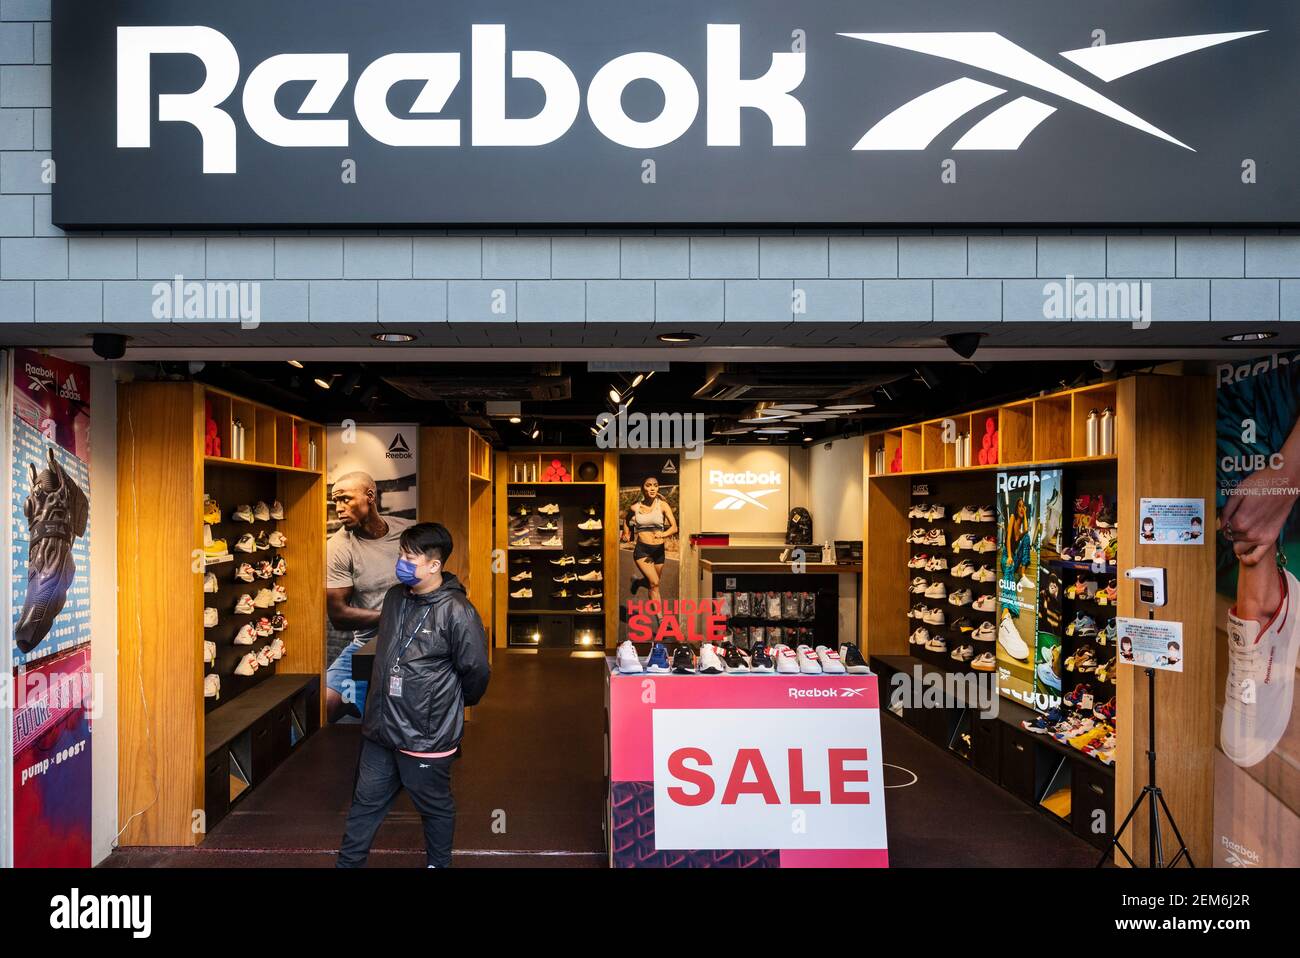 https://c8.alamy.com/comp/2EM6J2R/german-multinational-footwear-company-brand-reebok-store-is-seen-in-hong-kong-photo-by-chukrut-budrul-sopa-imagessipa-usa-2EM6J2R.jpg